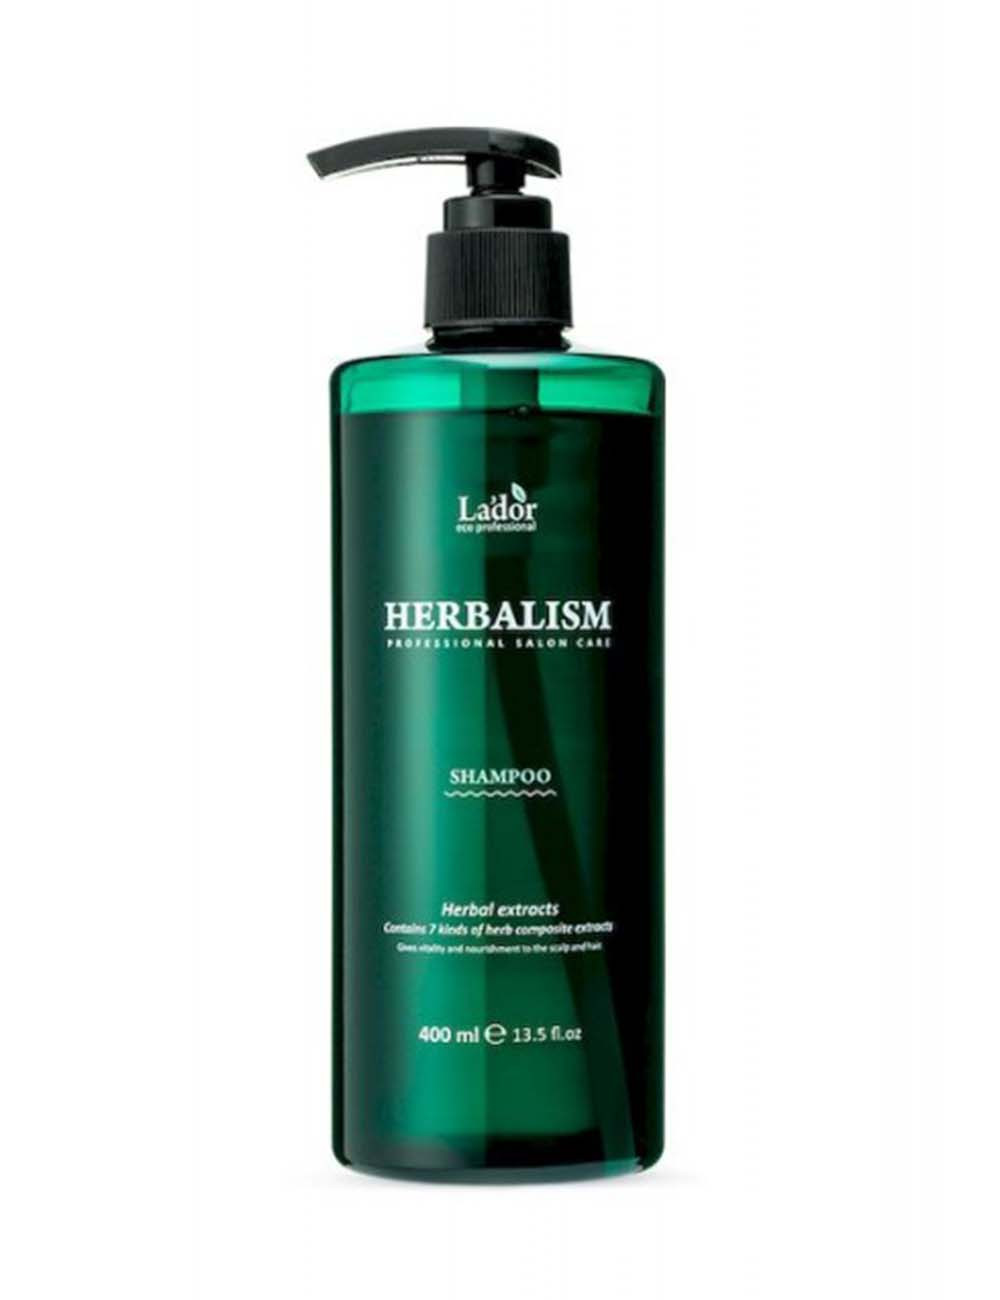 LA'DOR Herbalism Shampoo 400ml